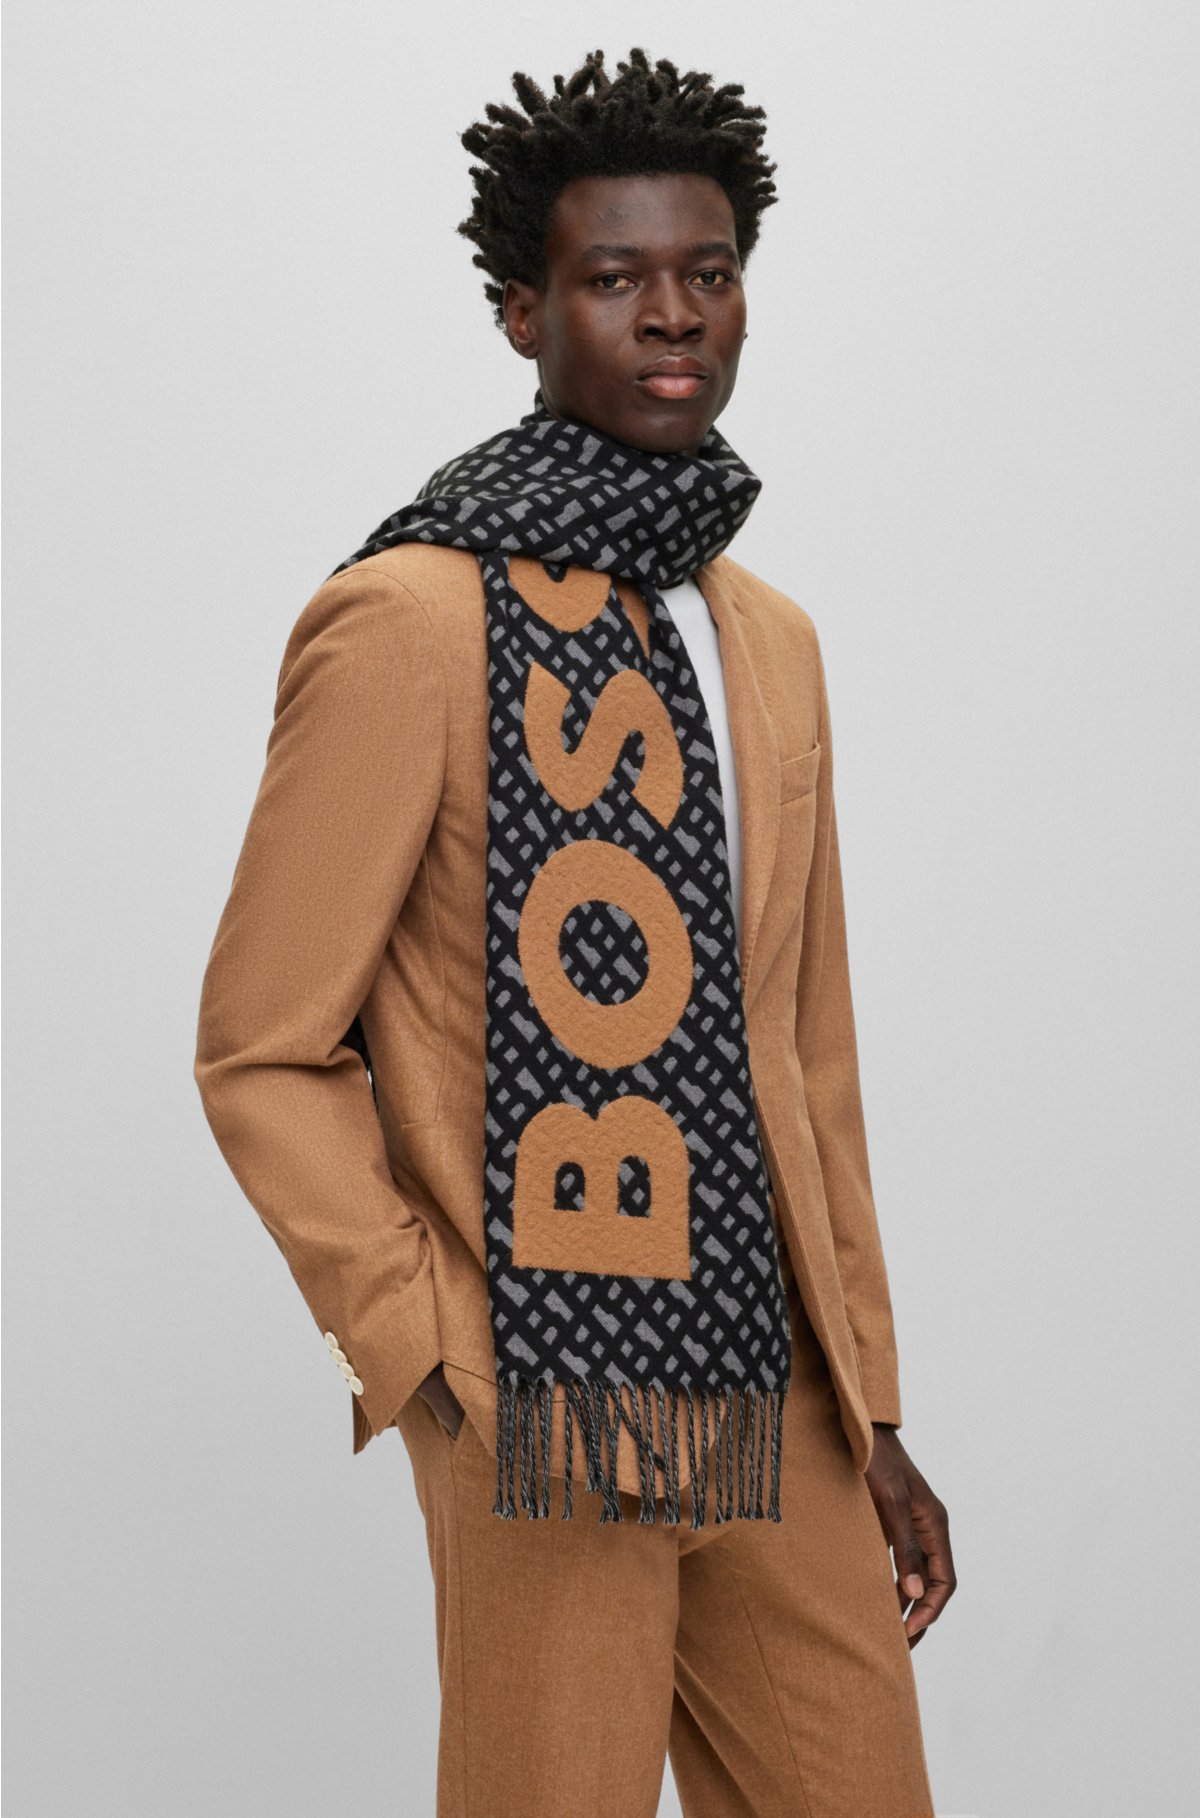 Louis Vuitton White Wool Blend Chain Print Cropped Sweater Size XS